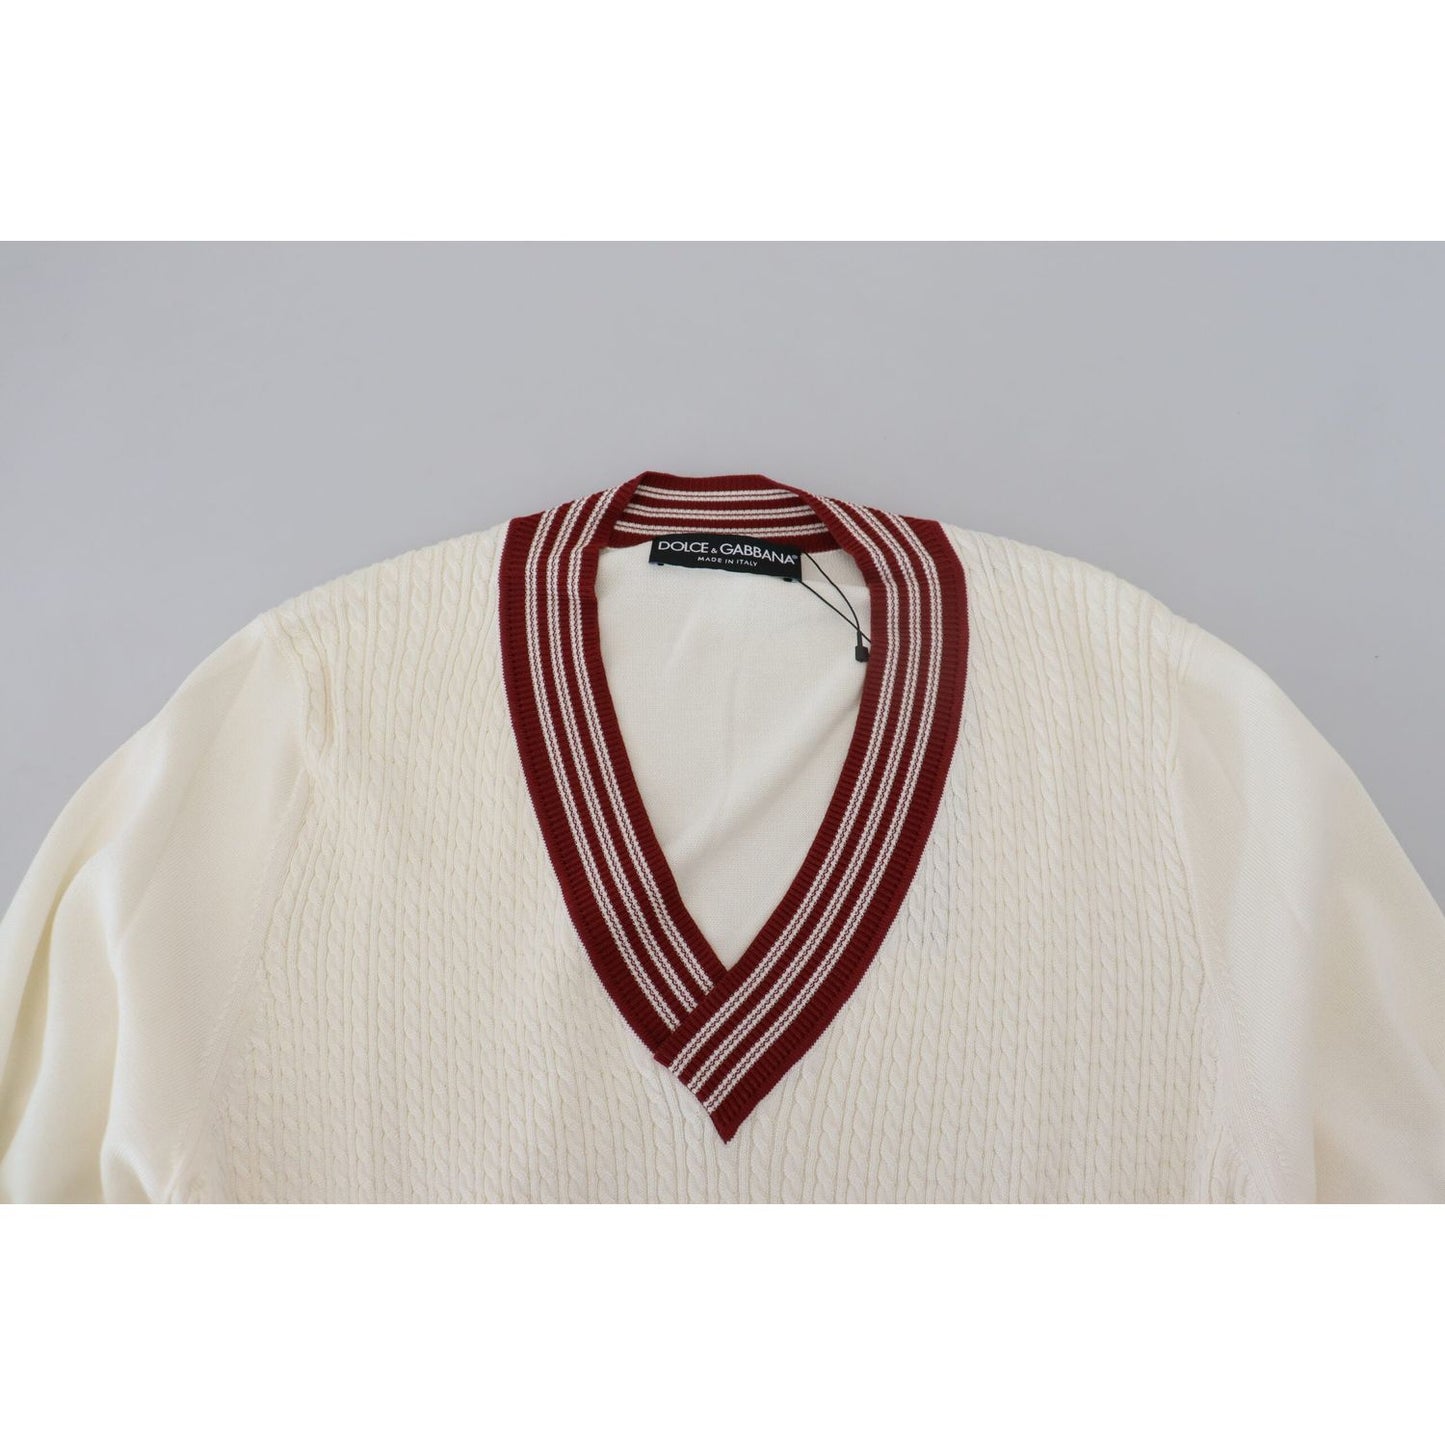 Dolce & Gabbana Off White Silk Cotton V-Neck Sweater white-red-knitted-v-neck-pullover-sweater